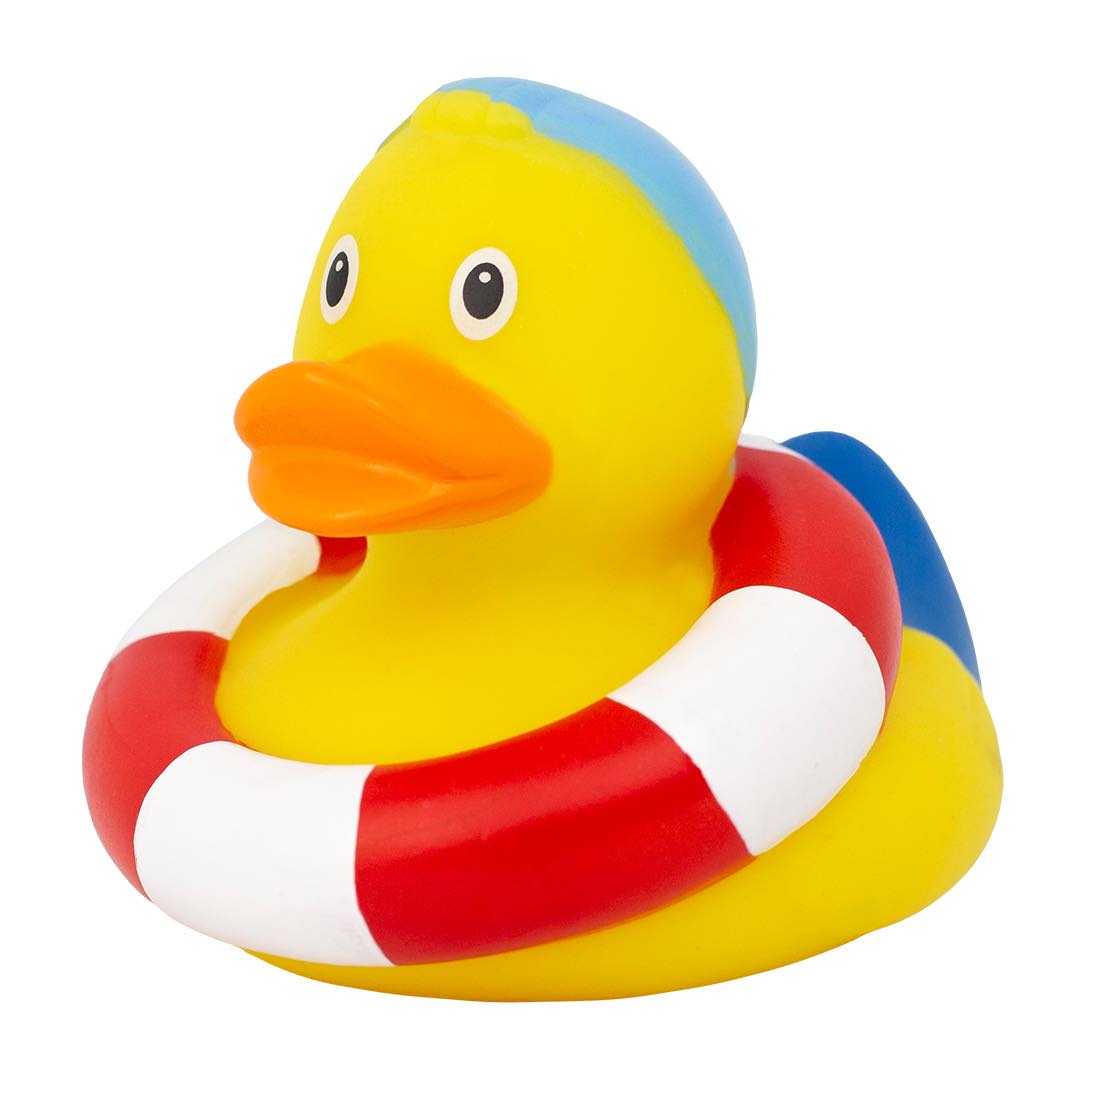 Swimmer Rubber Duck  Buy premium rubber ducks online - world wide delivery!